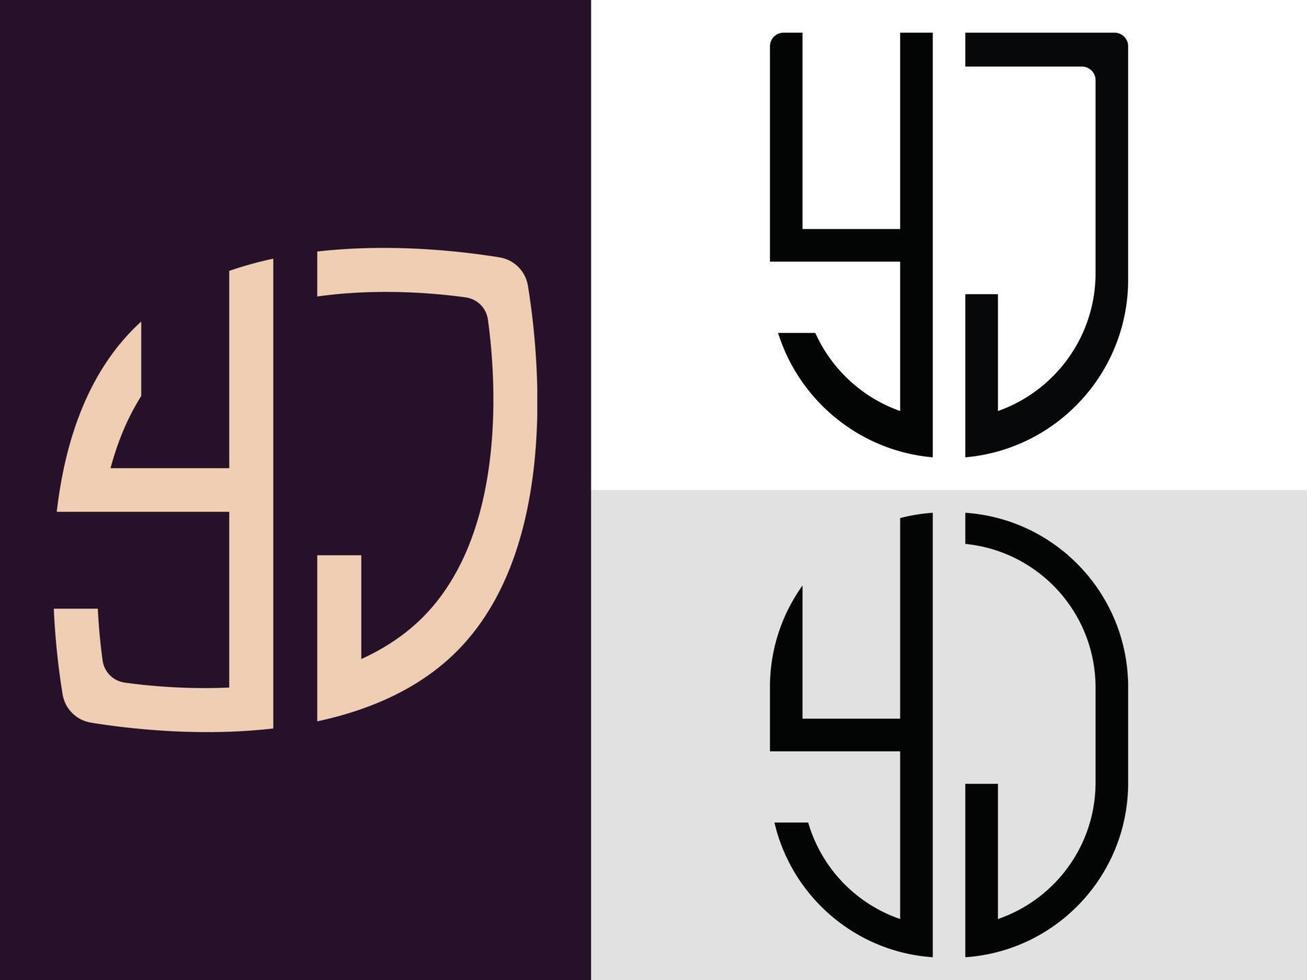 kreative anfangsbuchstaben yj logo designs paket. vektor